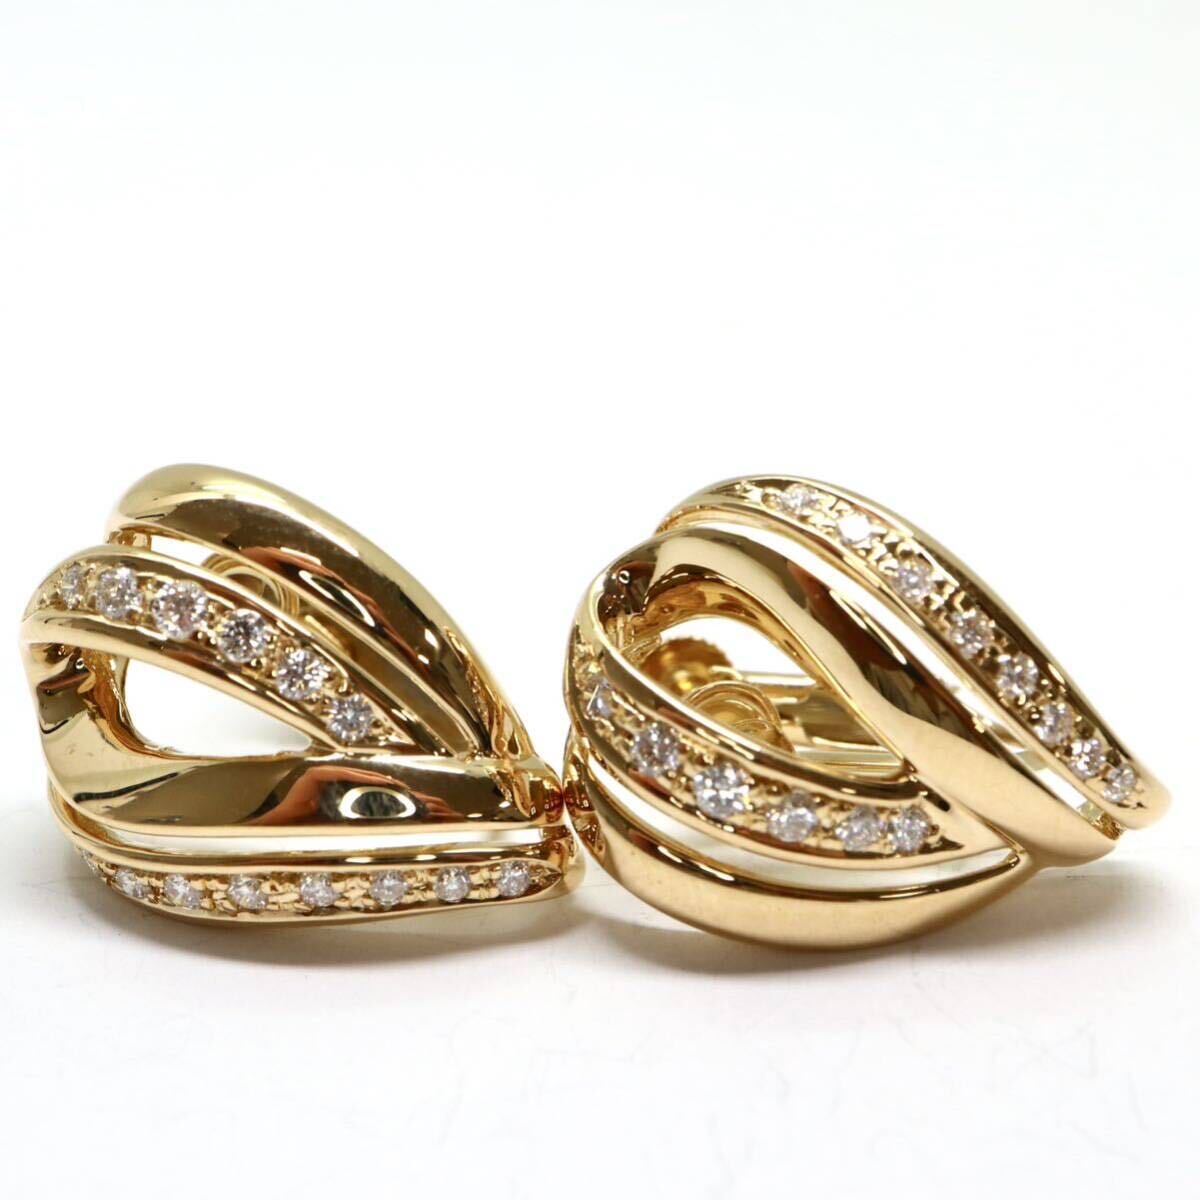 TASAKI(田崎真珠) 《K18 天然ダイヤモンドイヤリング》A 約7.5g 0.18ct diamond earring ジュエリー jewelry EG1/EG5の画像4